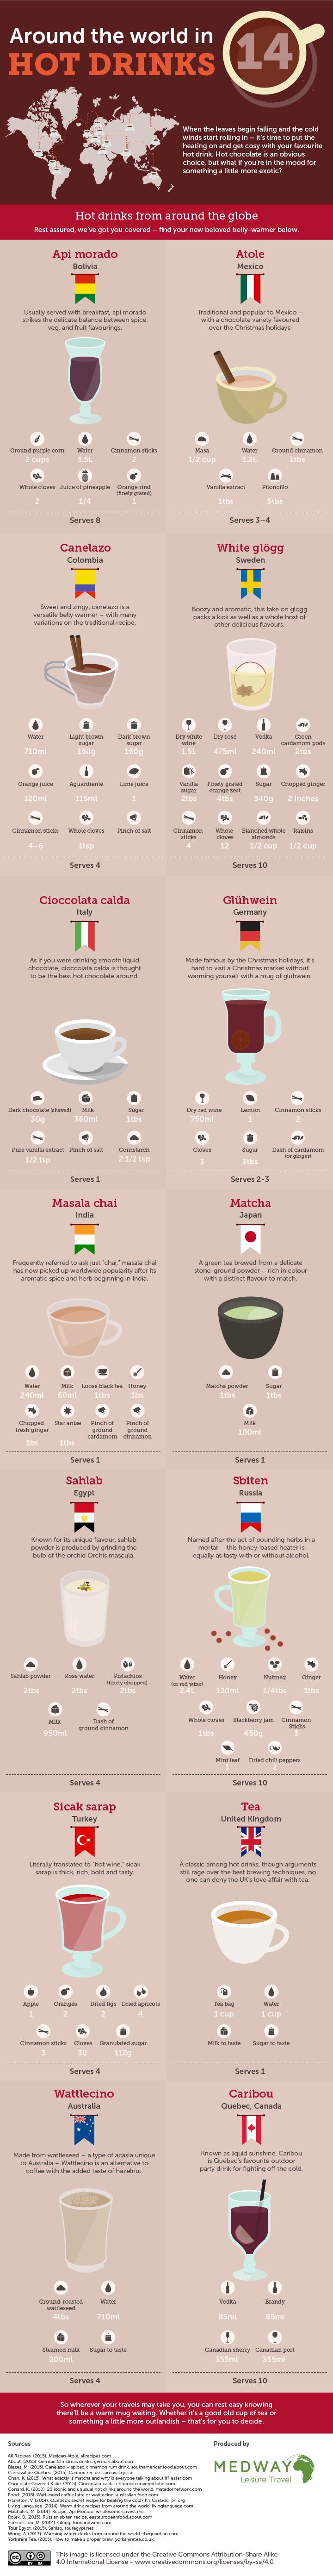 Around-the-world-in-14-hot-drinks